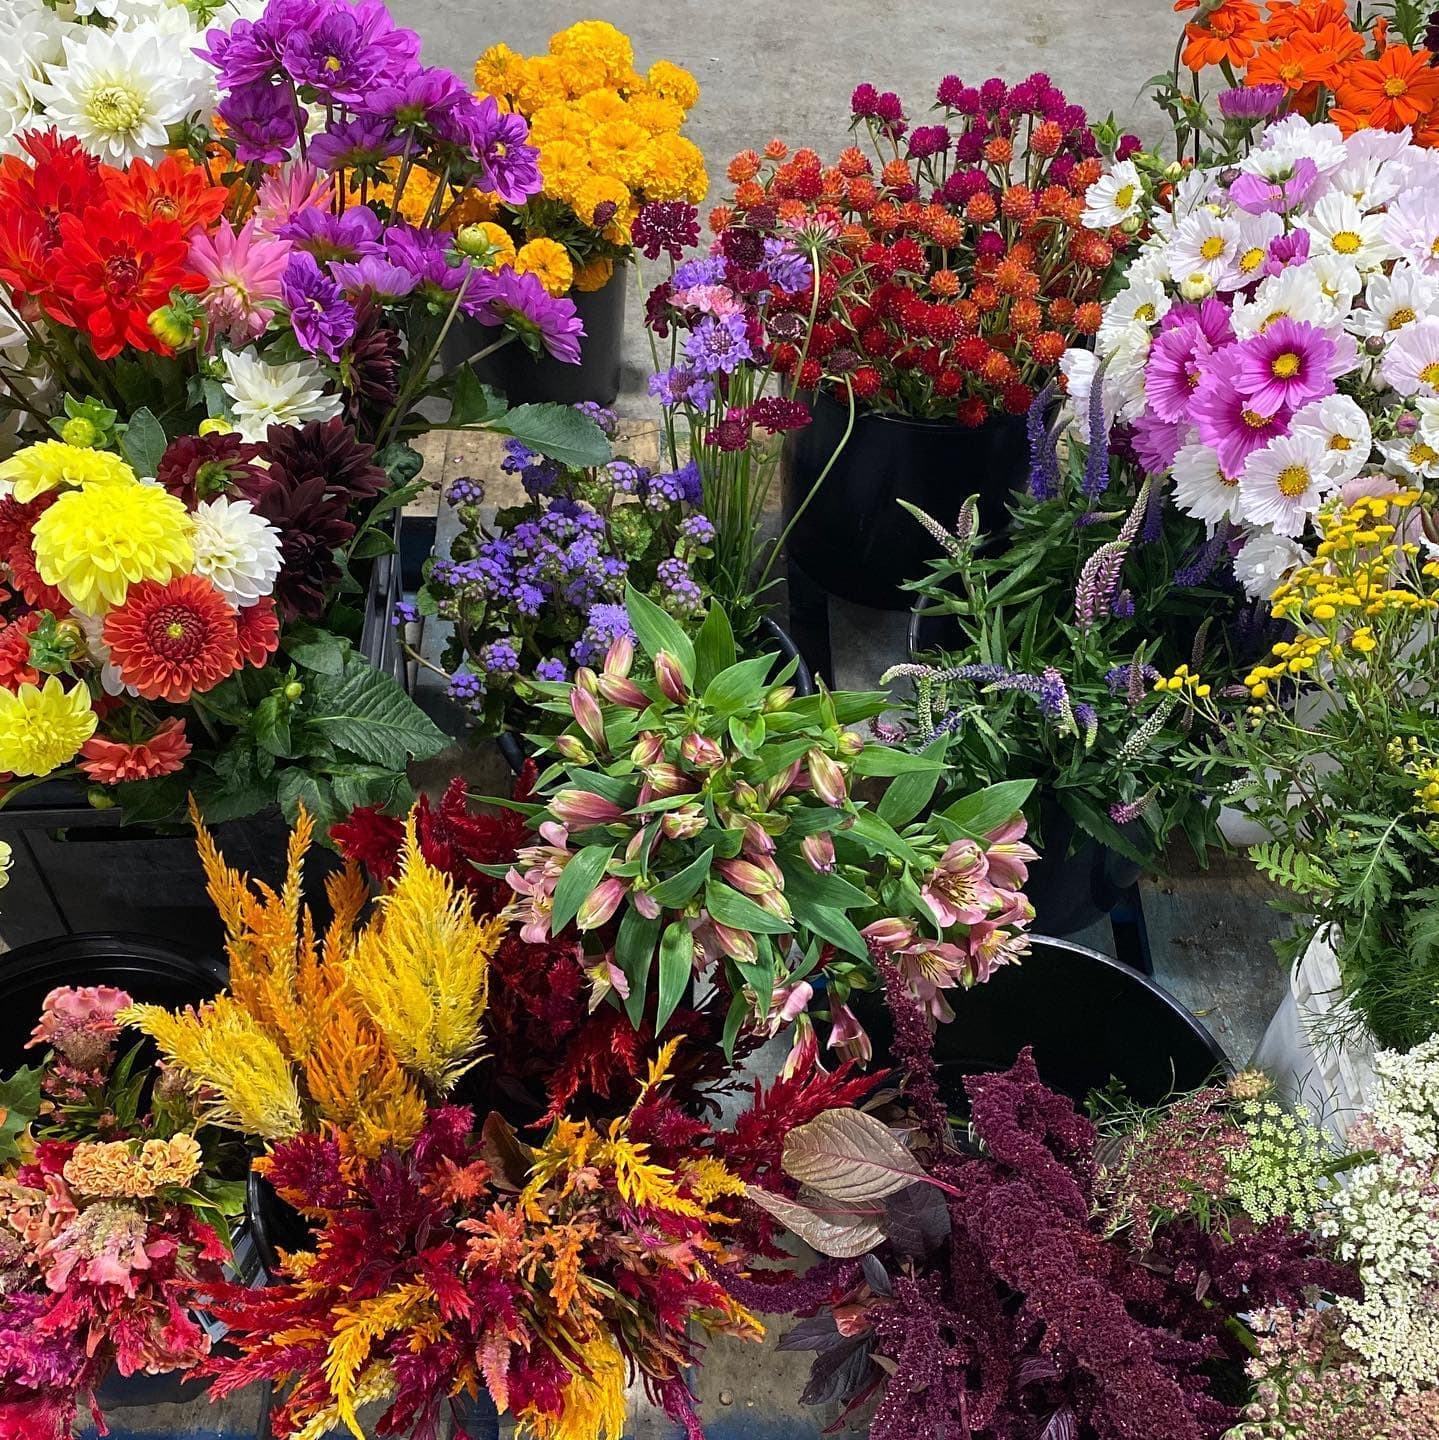 Le Mera Gardens September flower market: alstroemeria, amaranth, dahlias, cosmos, celosia plumosa, globe amaranths, blue ageratum, coxcombs, marigolds, veronica, ammi Queen Anne’s Lace.